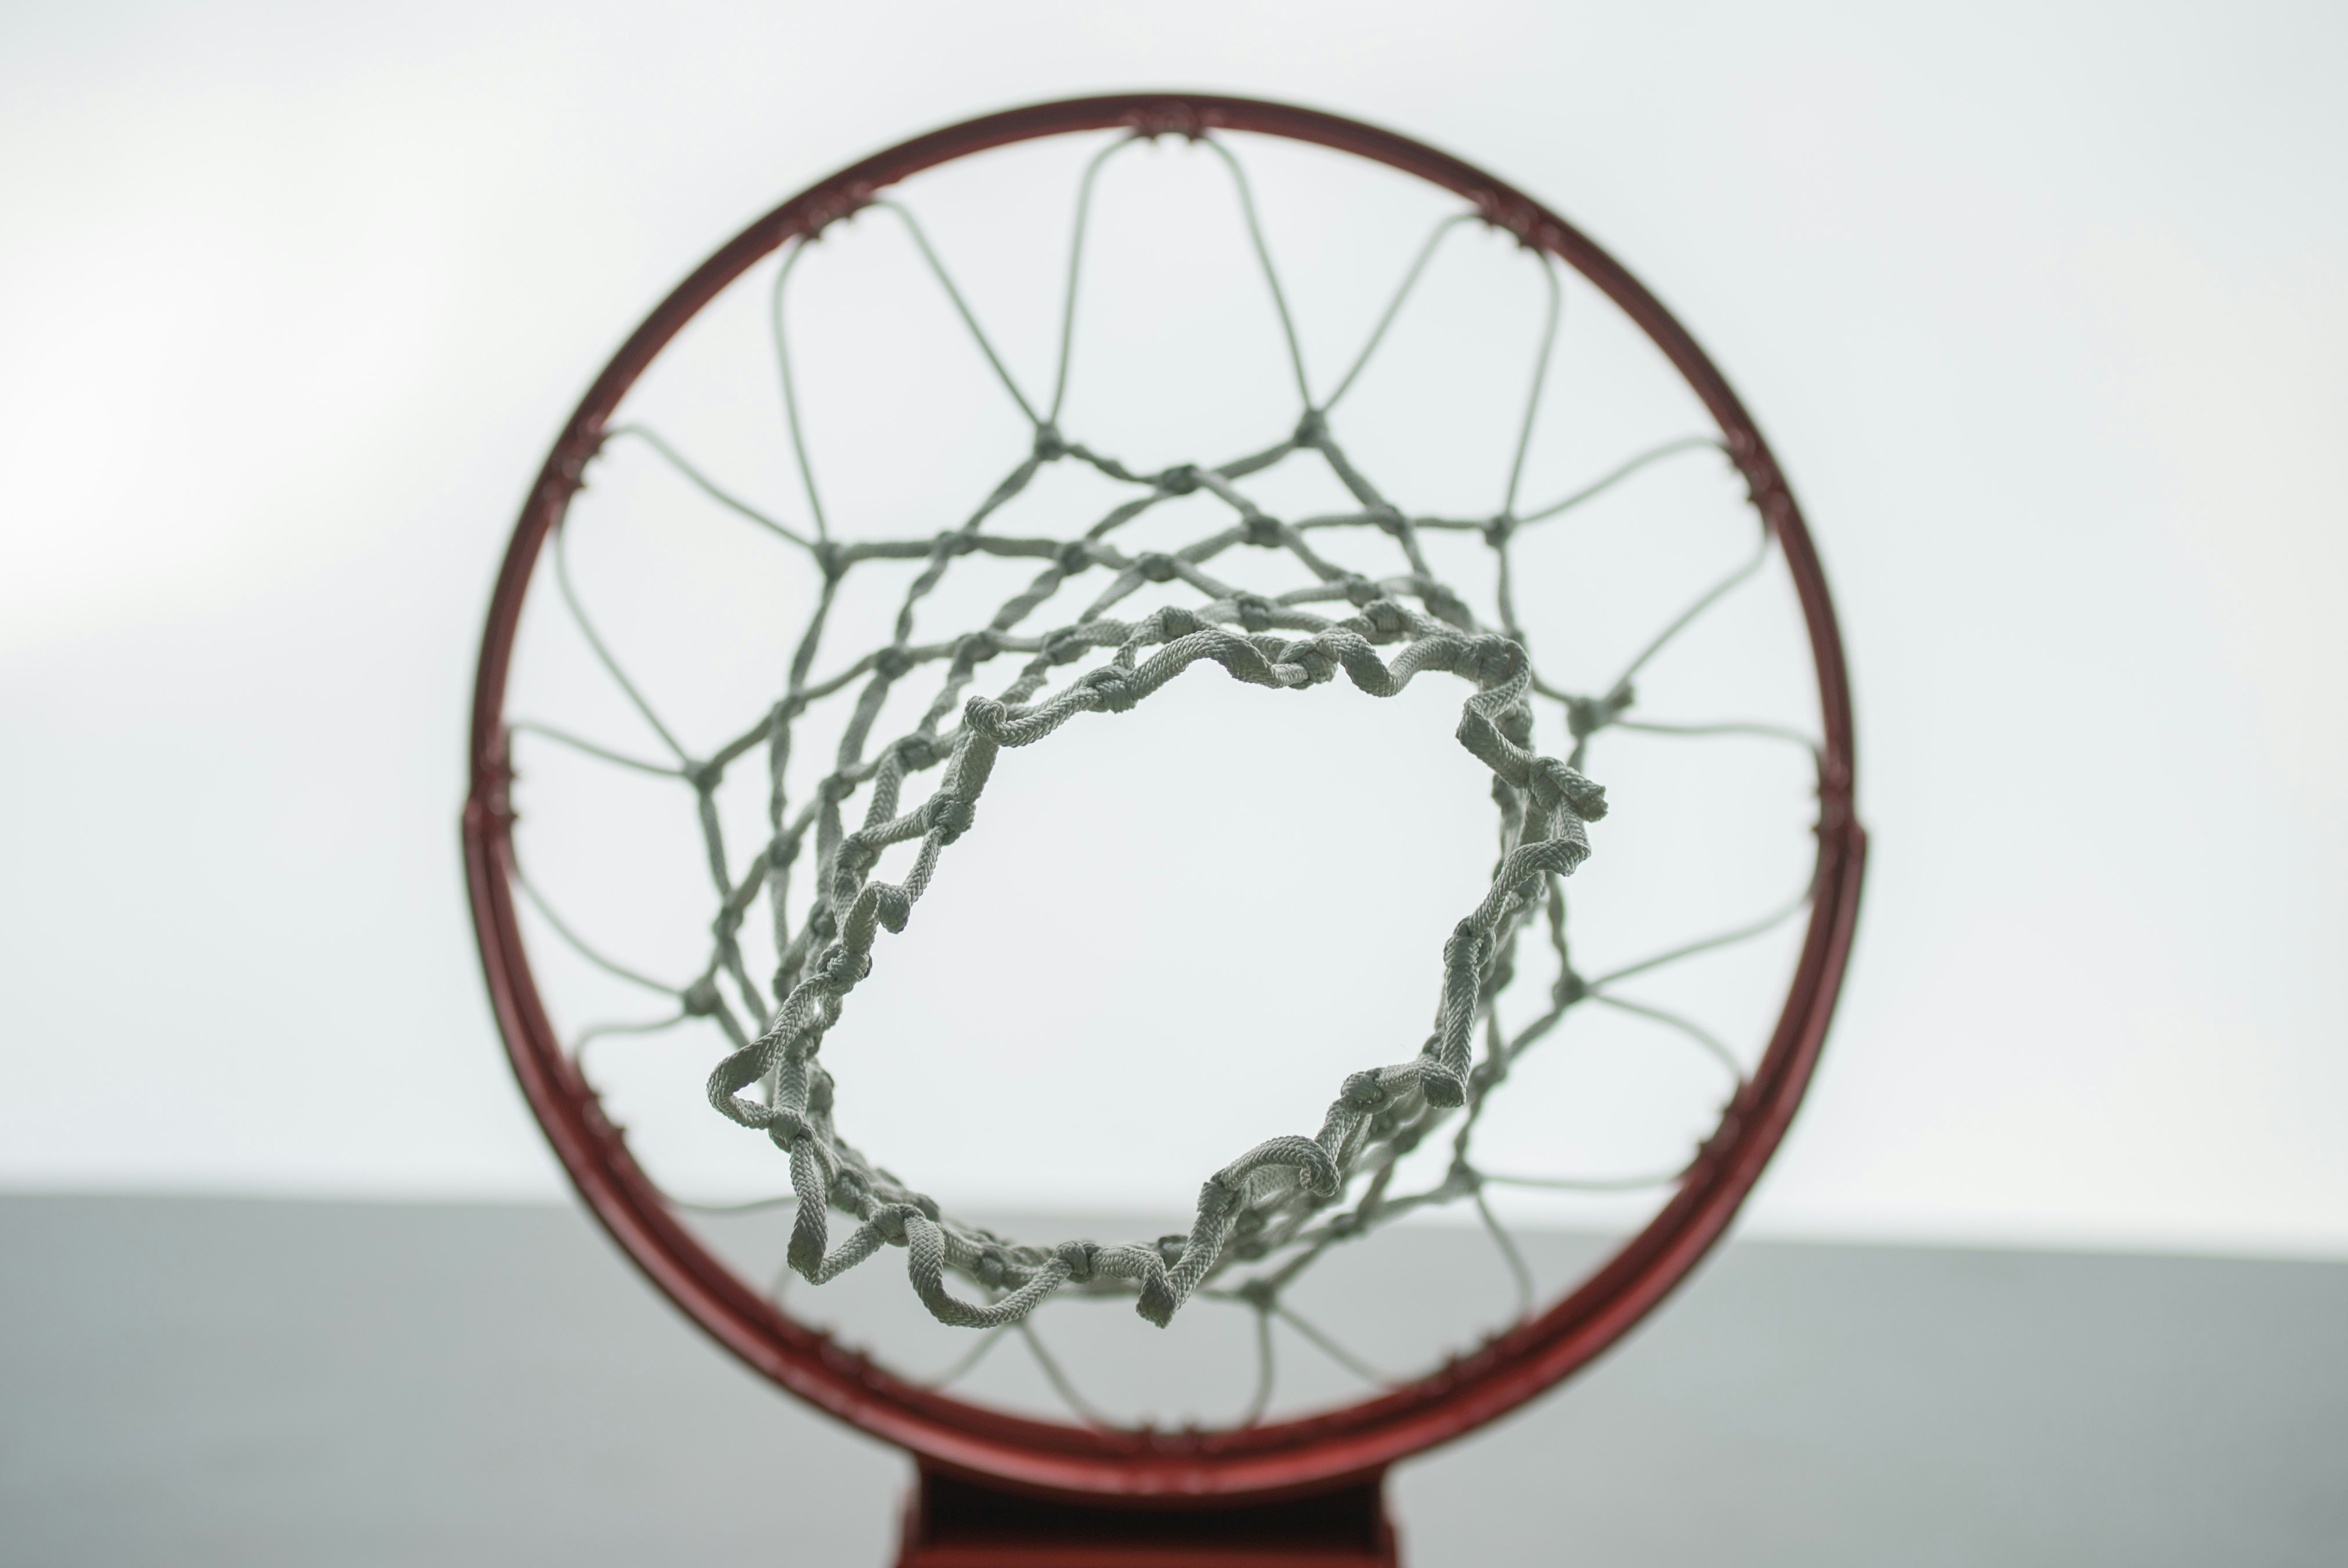 low angle photo of basketball hoop